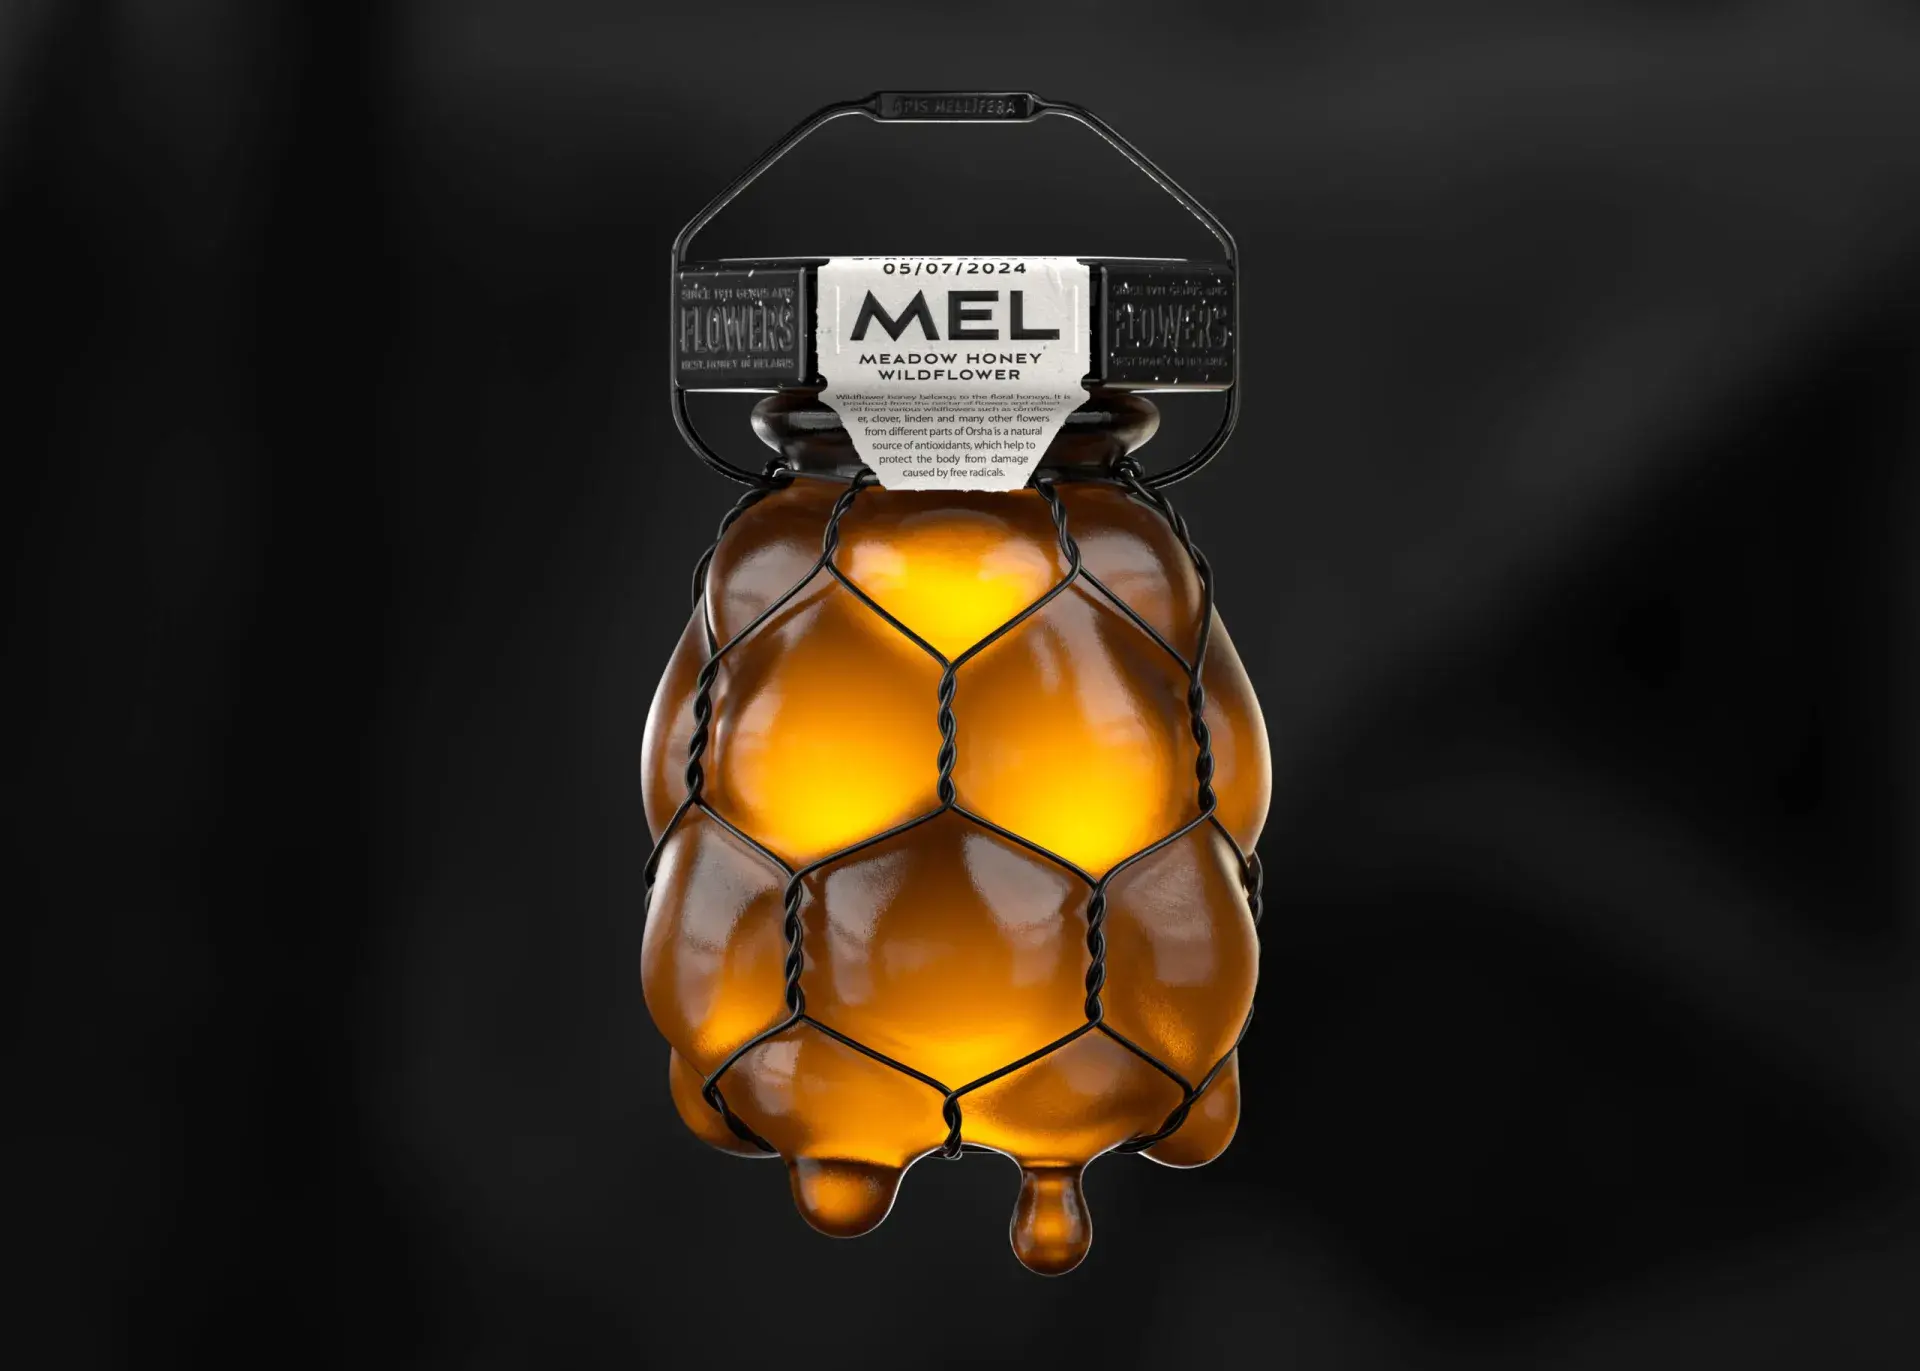 Blogduwebdesign inspiration packagings originaux innovants mel honey